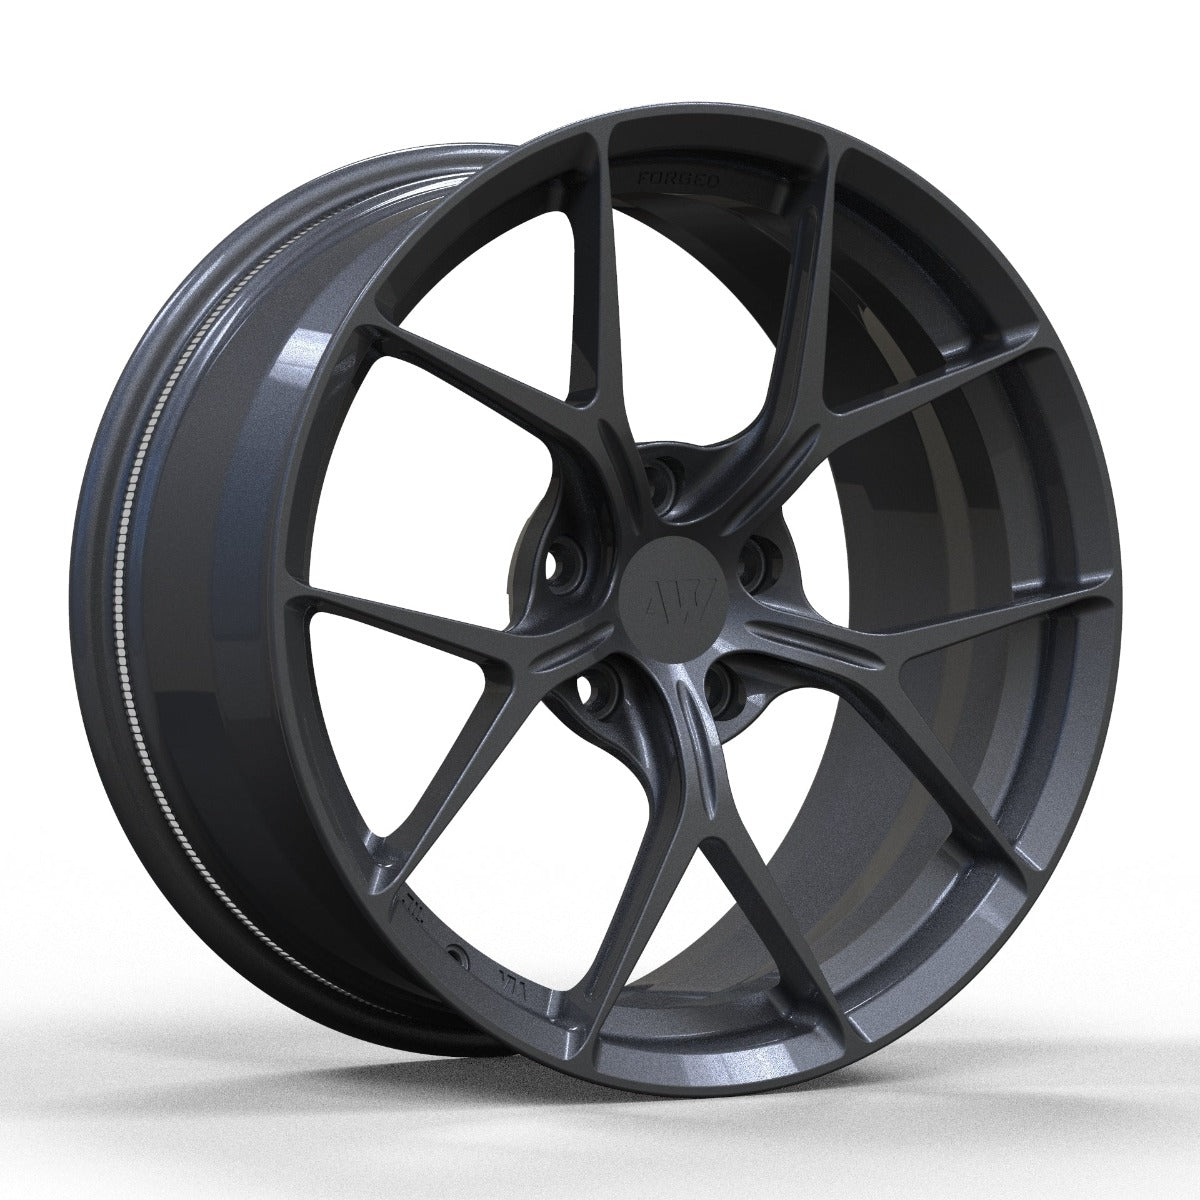 Fully Forged Wheels for Tesla Model 3/Y (AWZZ)